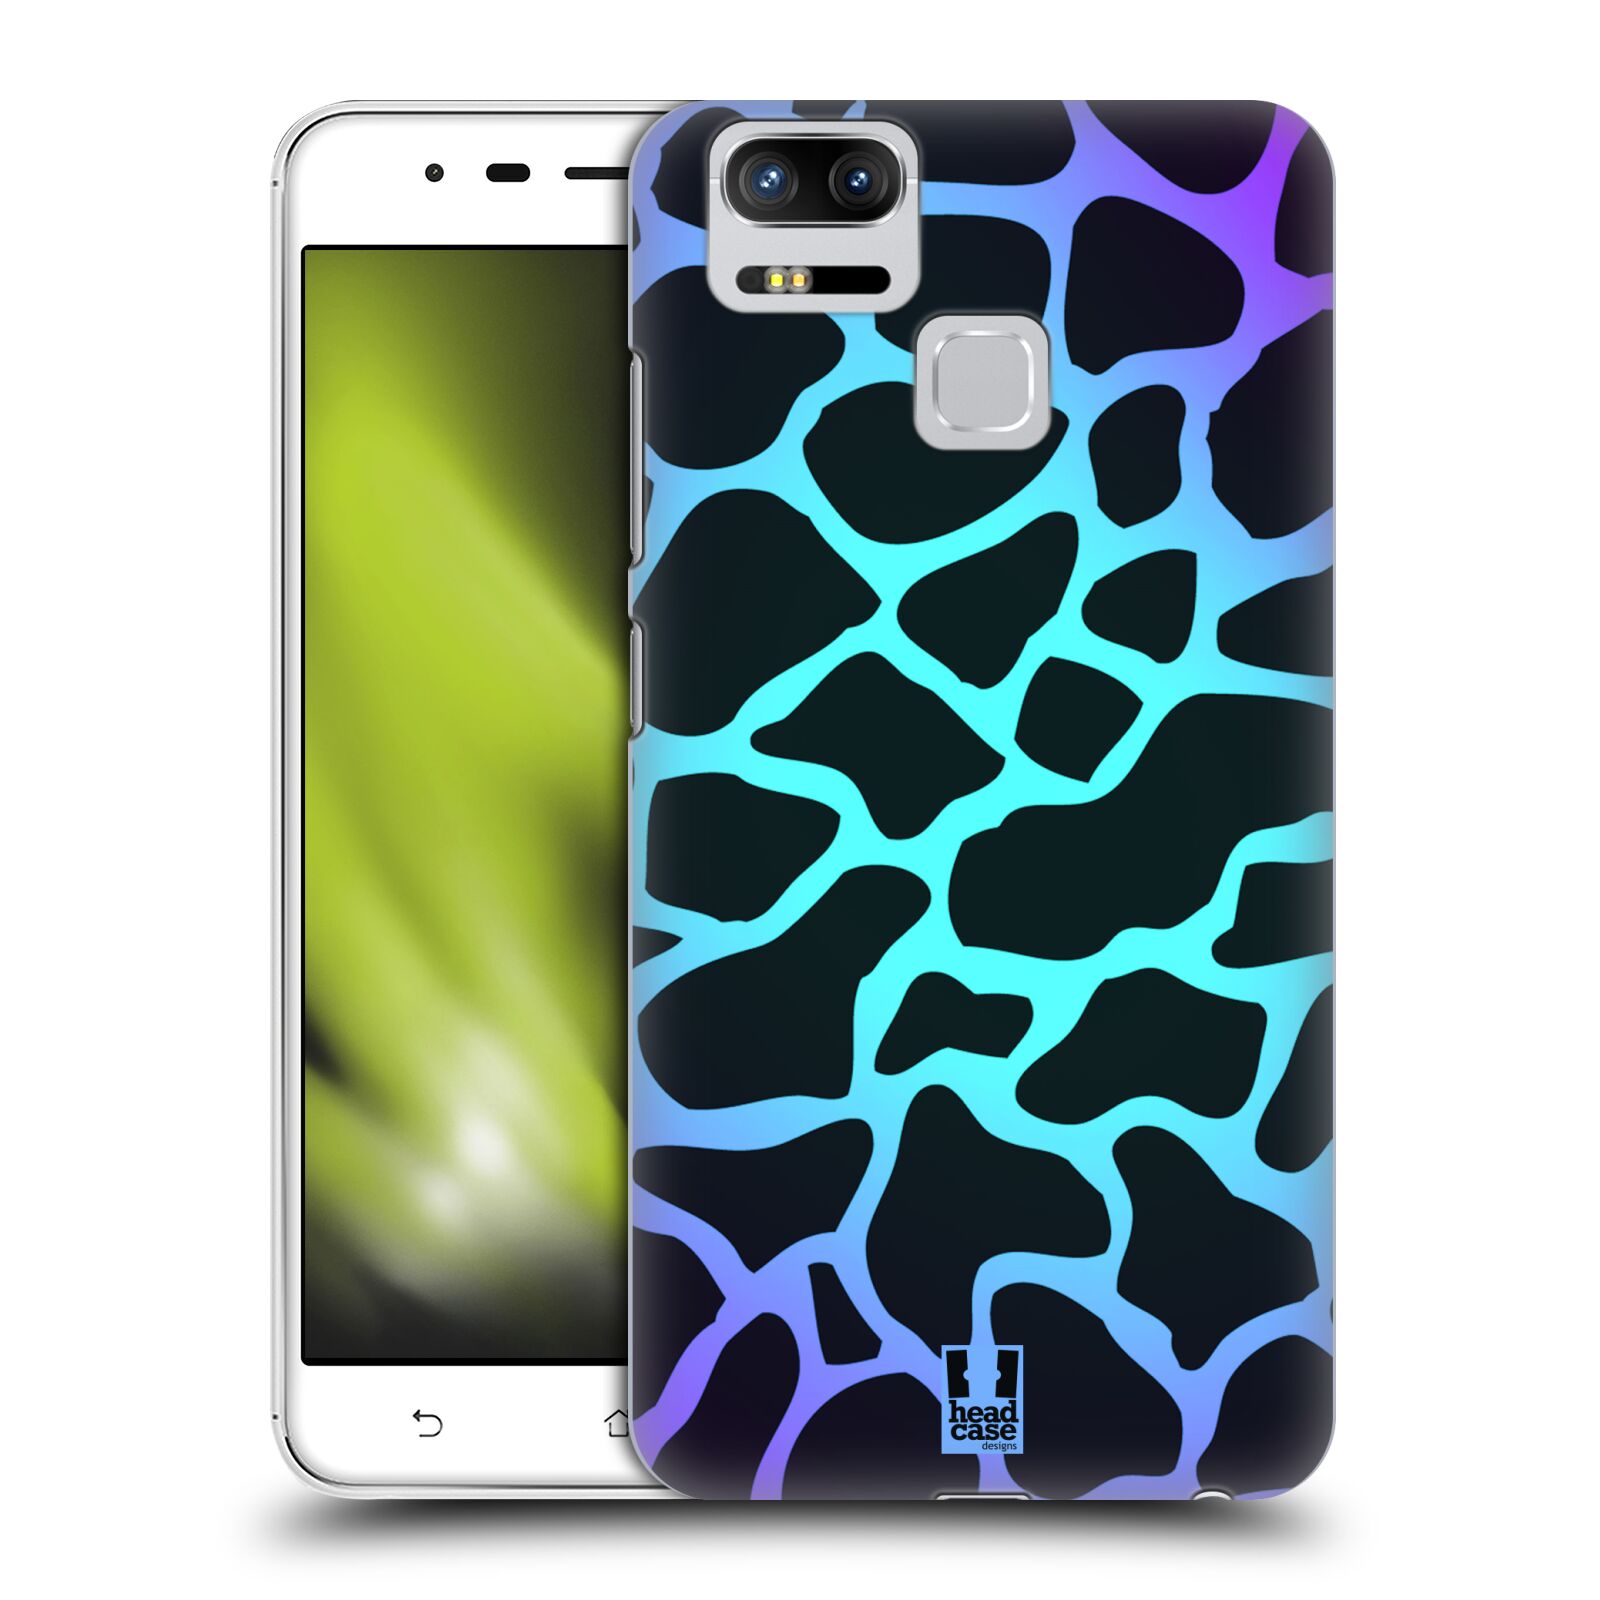 HEAD CASE plastový obal na mobil Asus Zenfone 3 Zoom ZE553KL vzor Divočina zvíře tyrkysová žirafa magický vzor